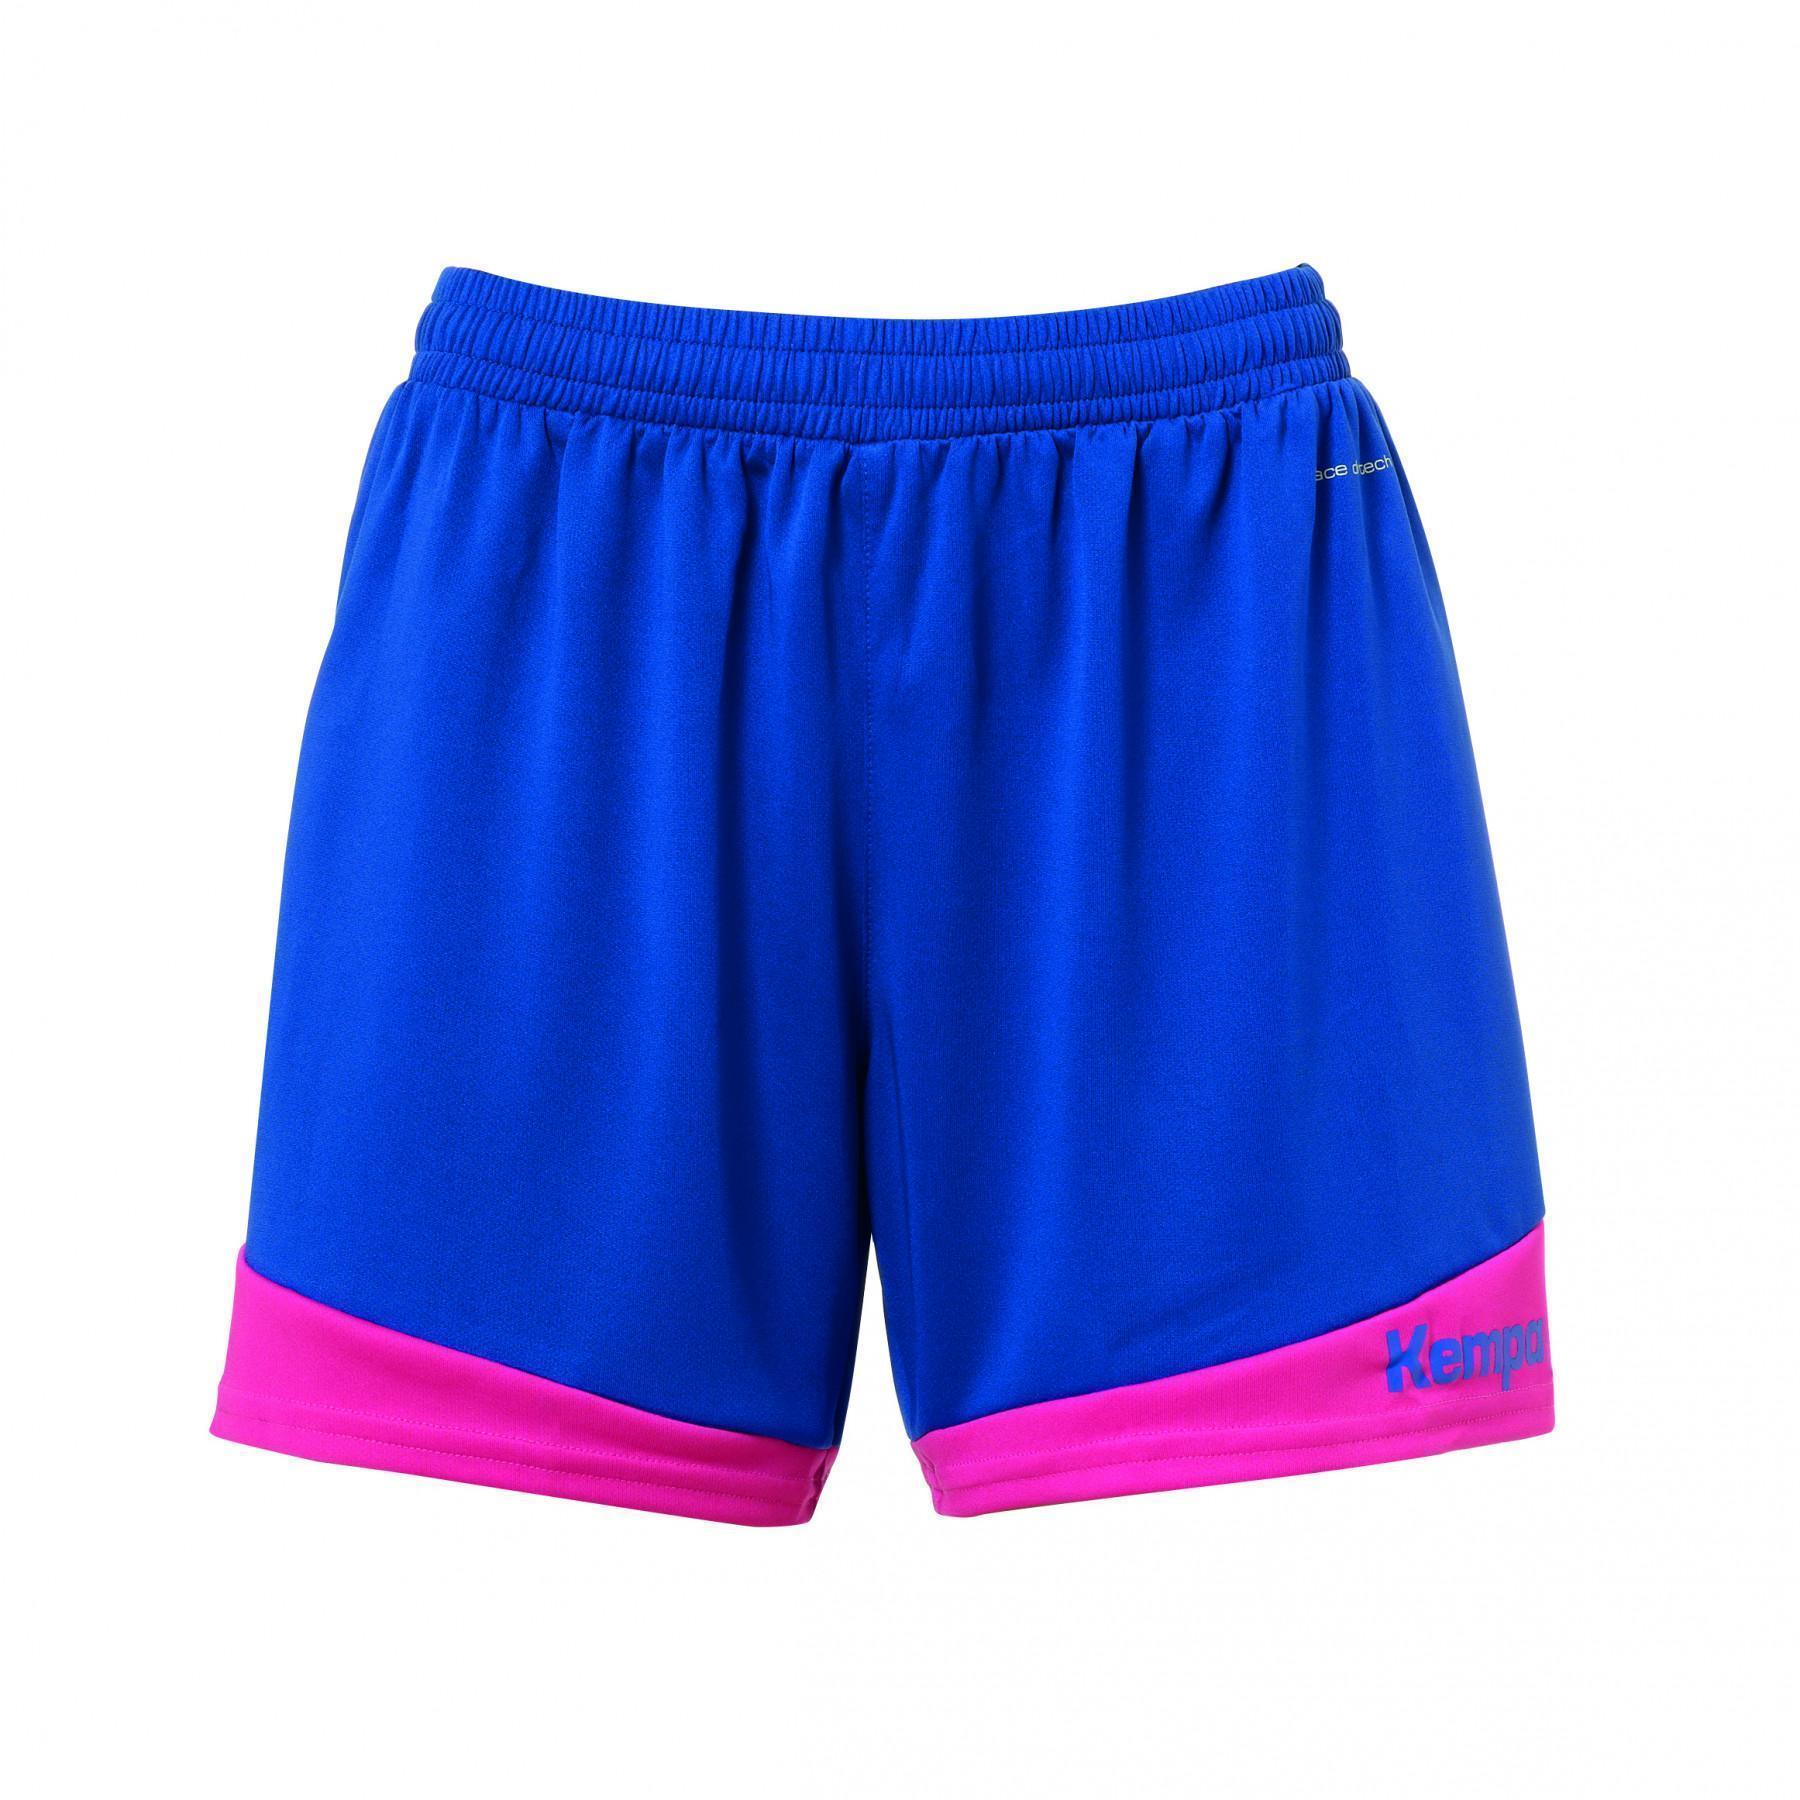 Color Kempa Peak Shorts